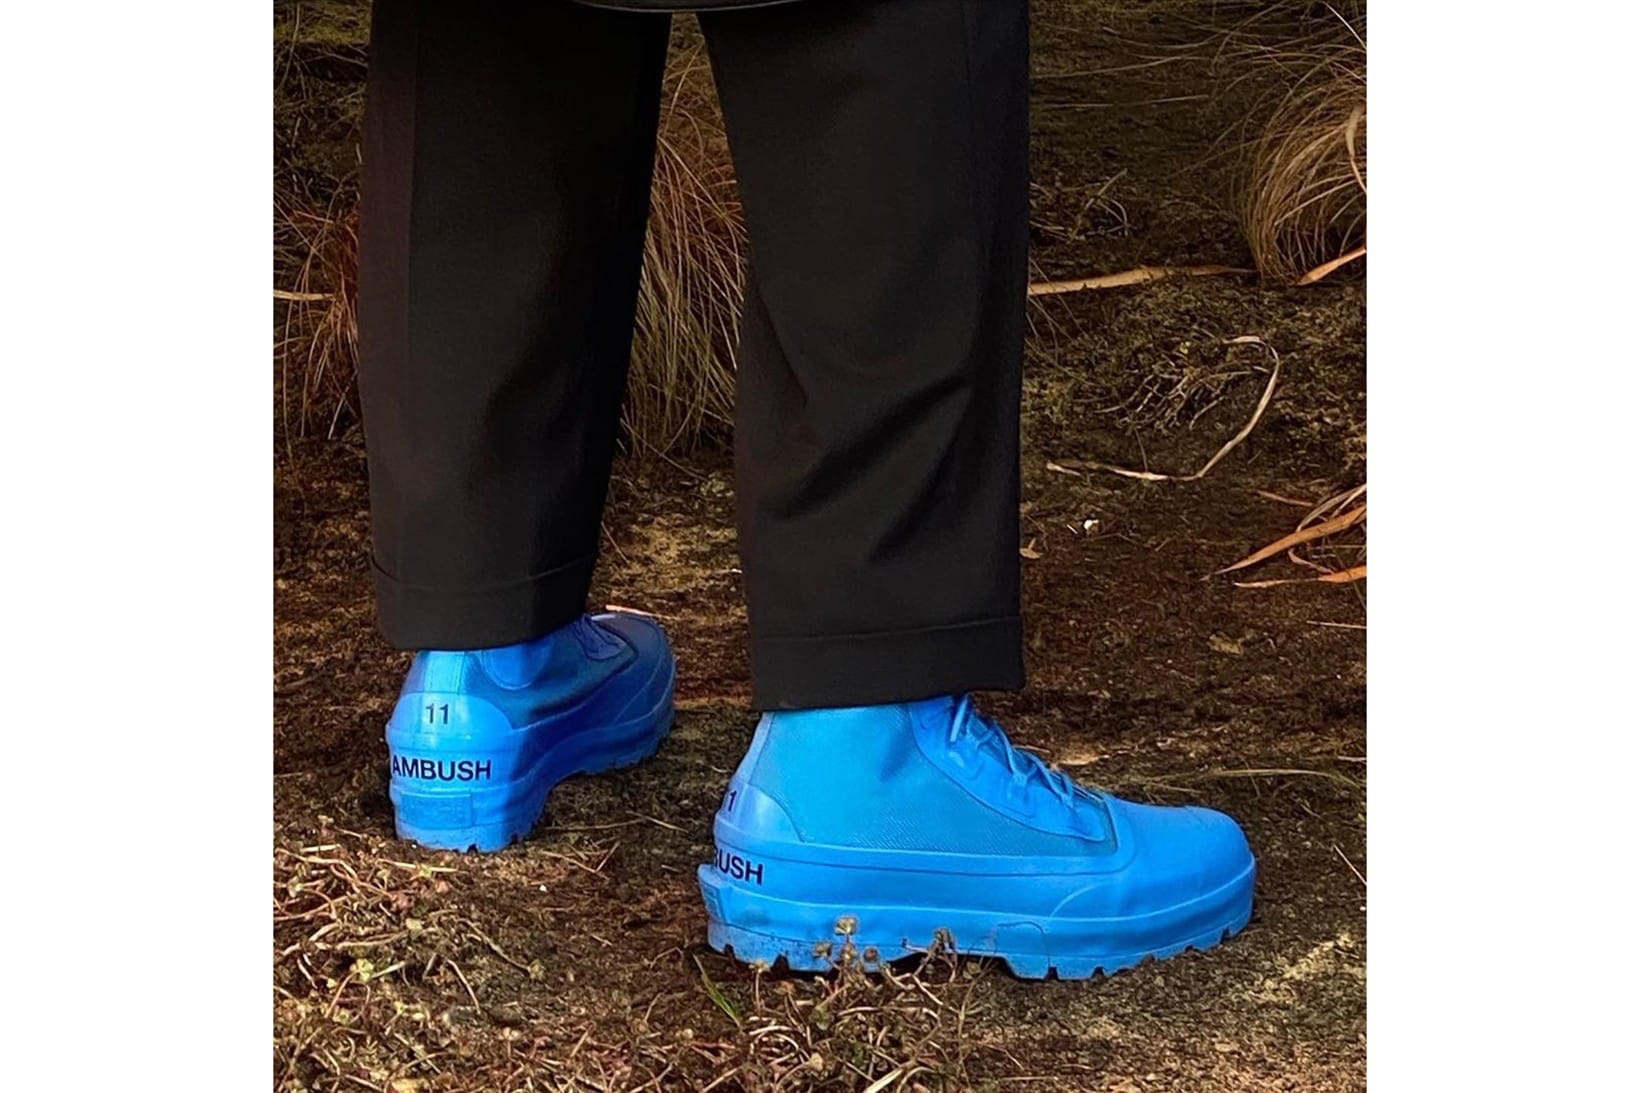 rain boots that look like converse